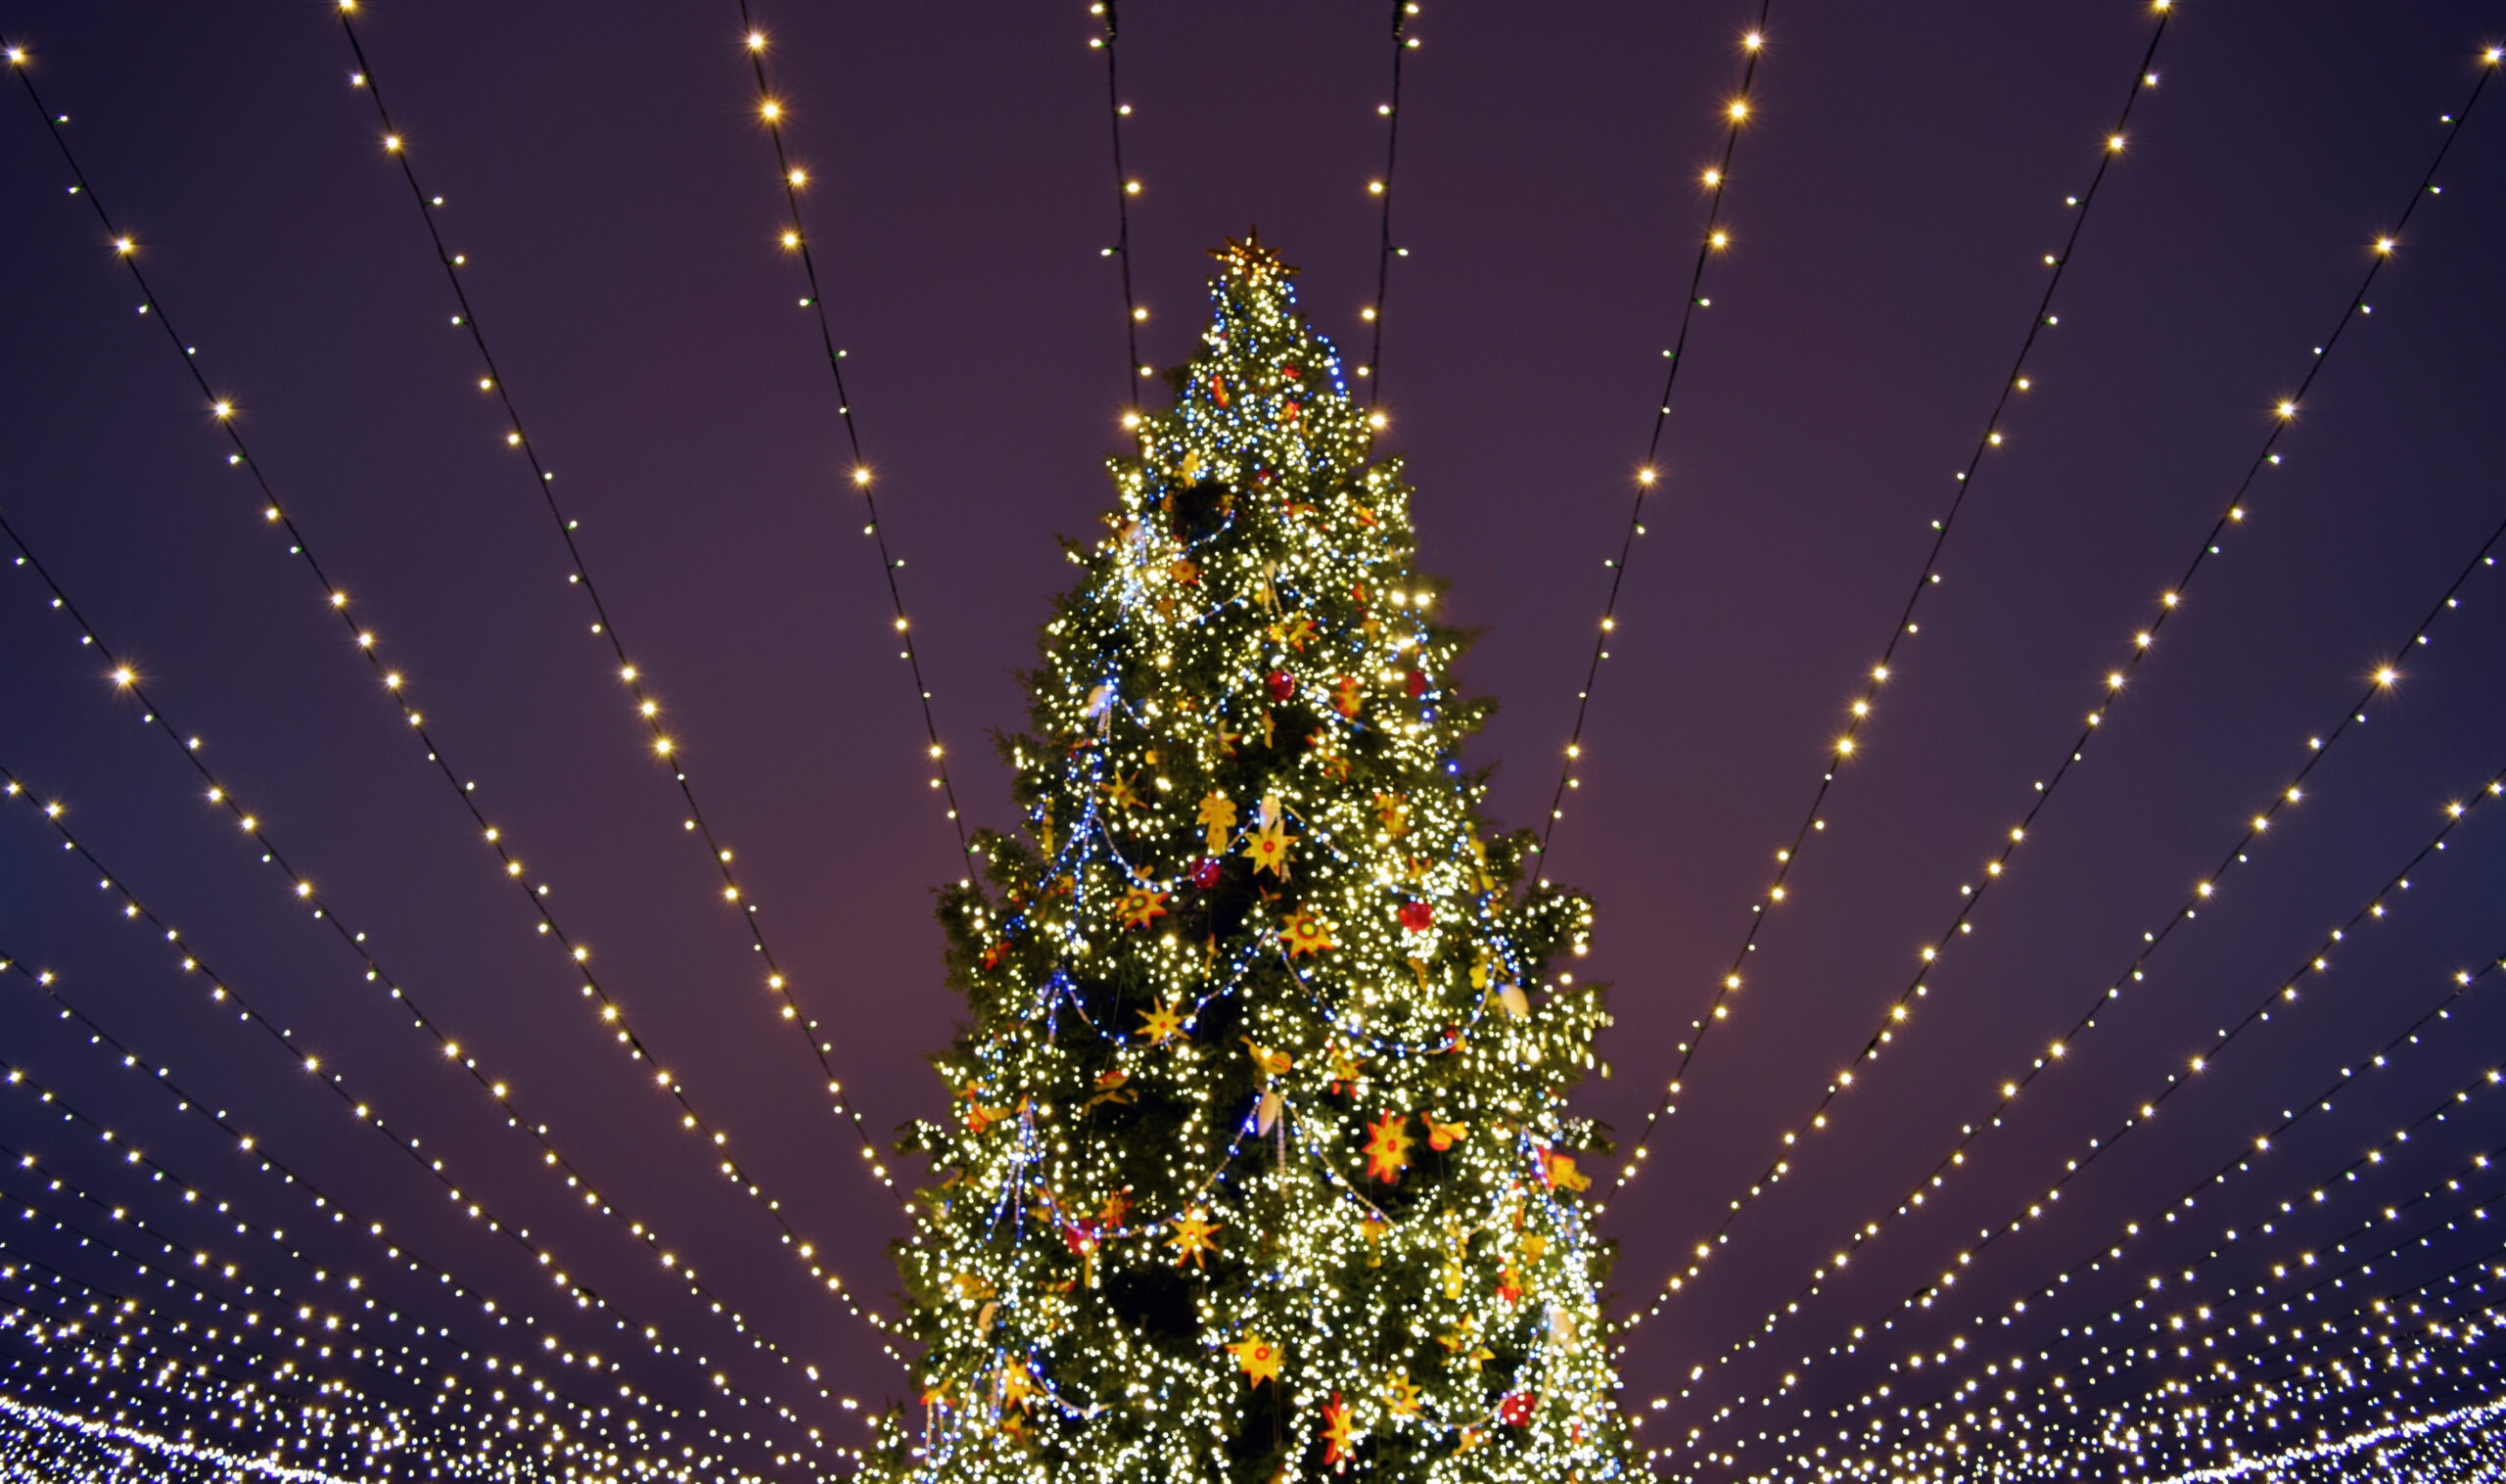 The Culver City Christmas Tree Lighting